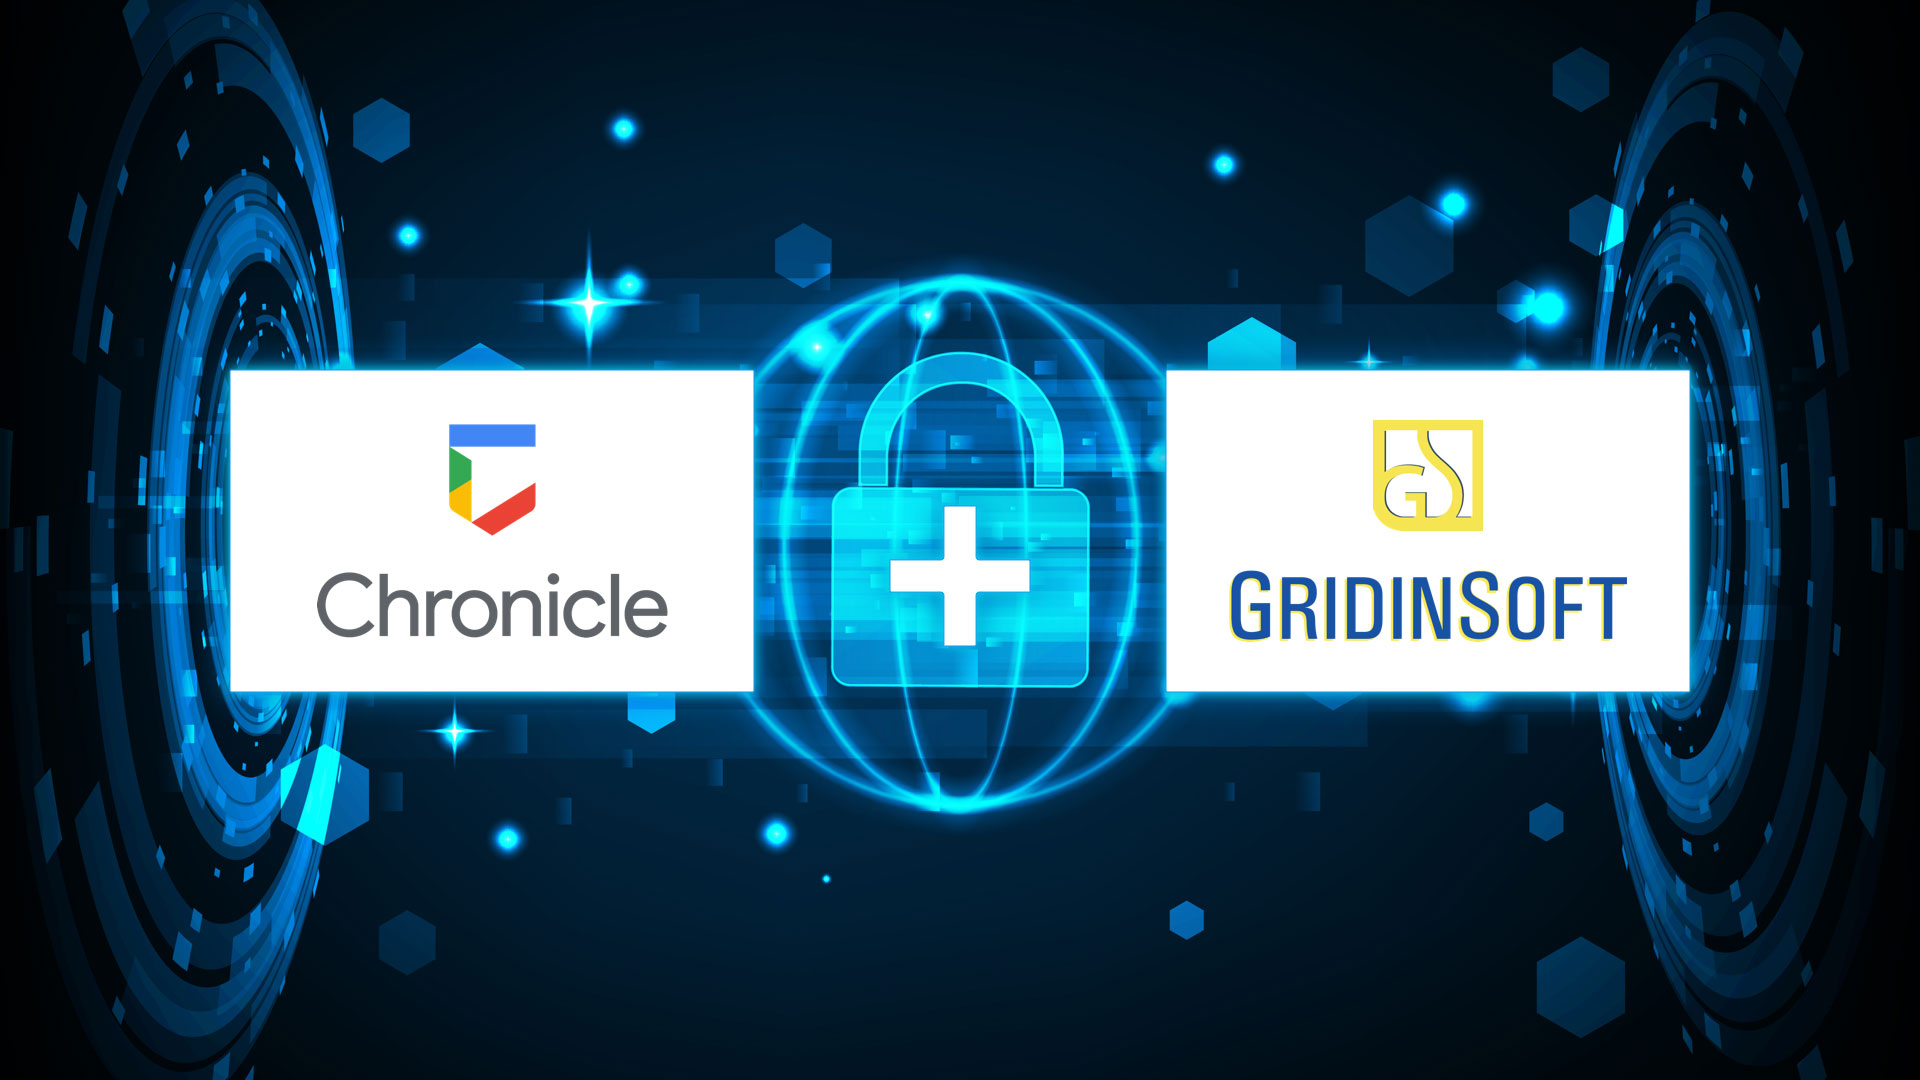 Gridinsoft becomes Google’s information security partner